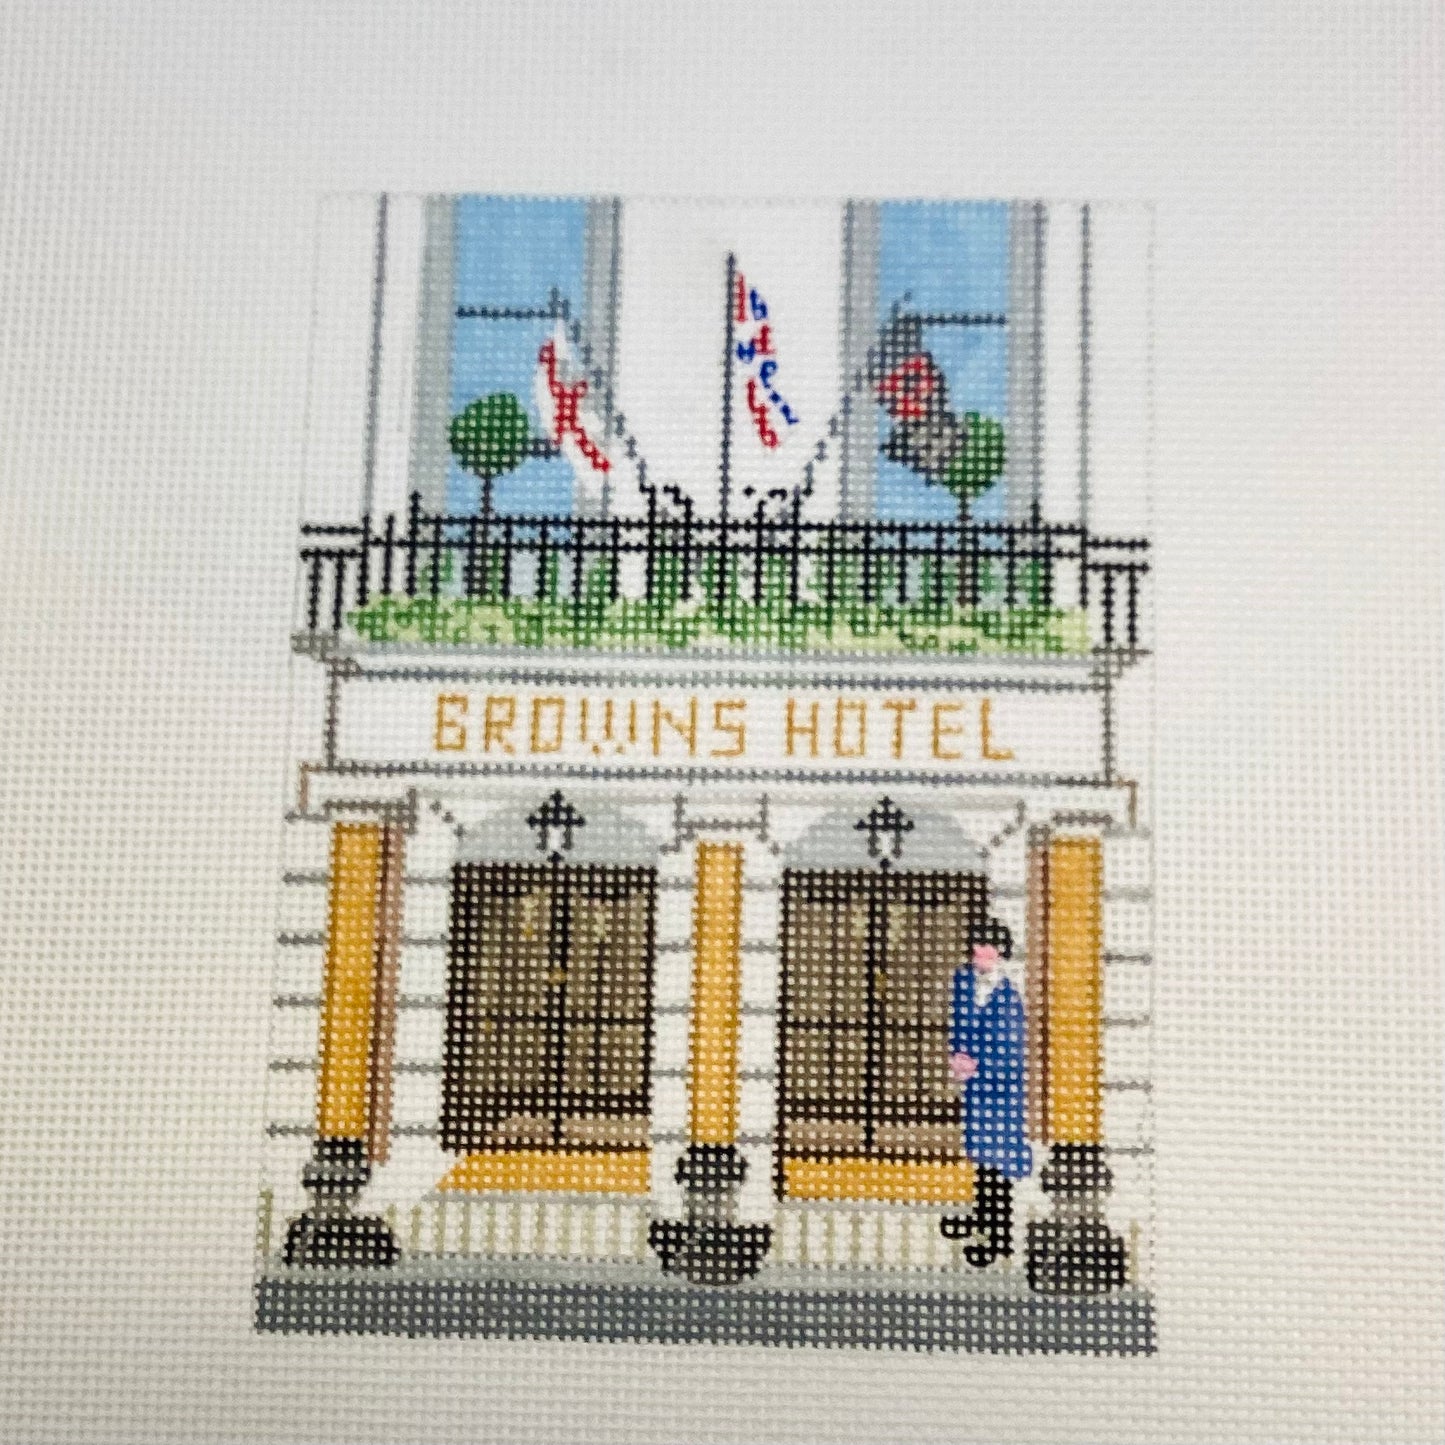 Browns Hotel